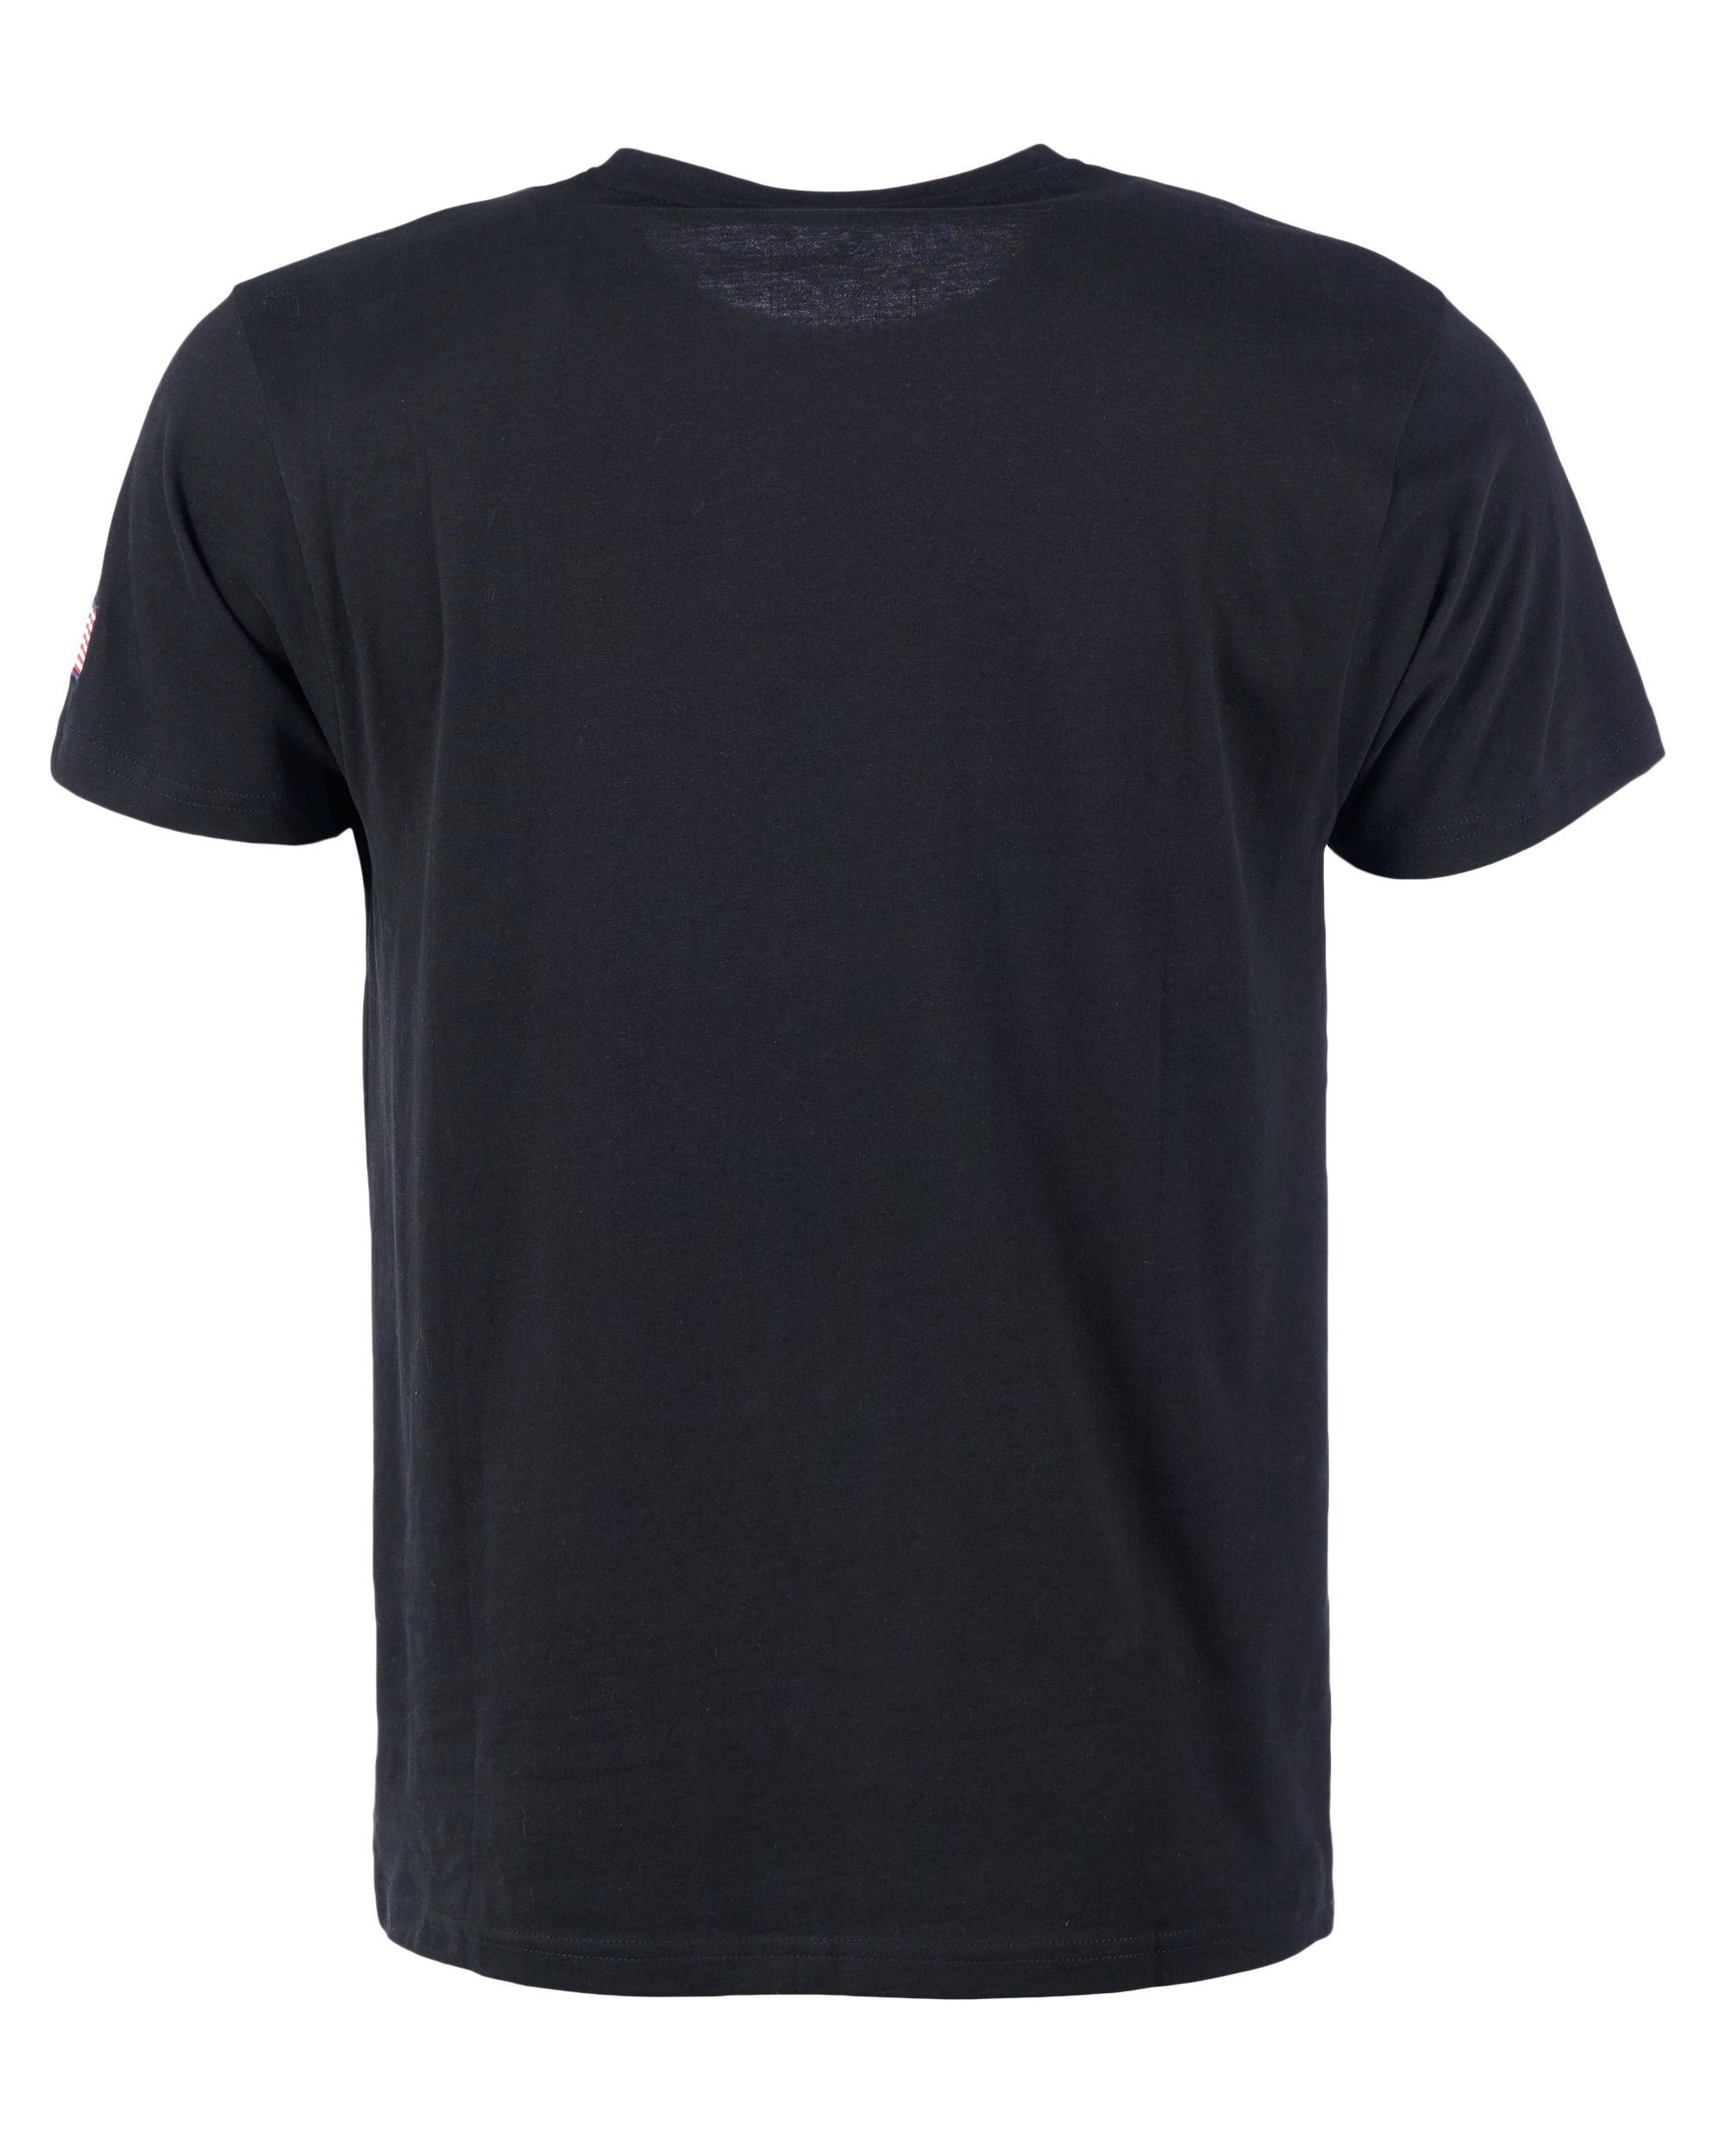 T-Shirt GUN black TOP TG20213006